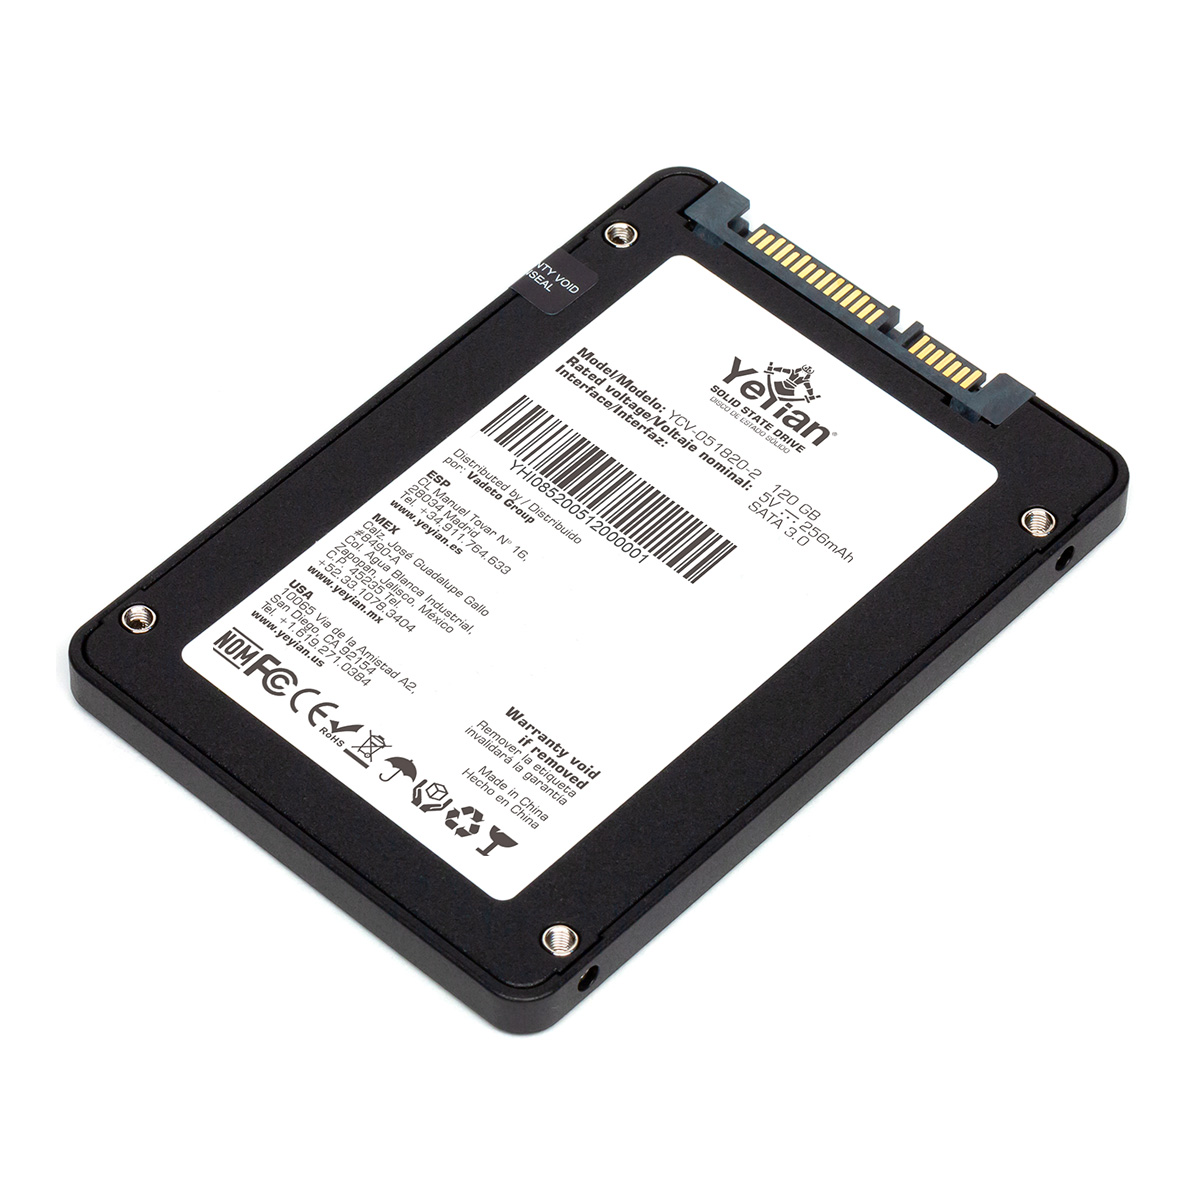 UNIDAD SSD YEYIAN YCV-051820-2 VALK, 120GB, SATA3, 420MB/S, 2.5